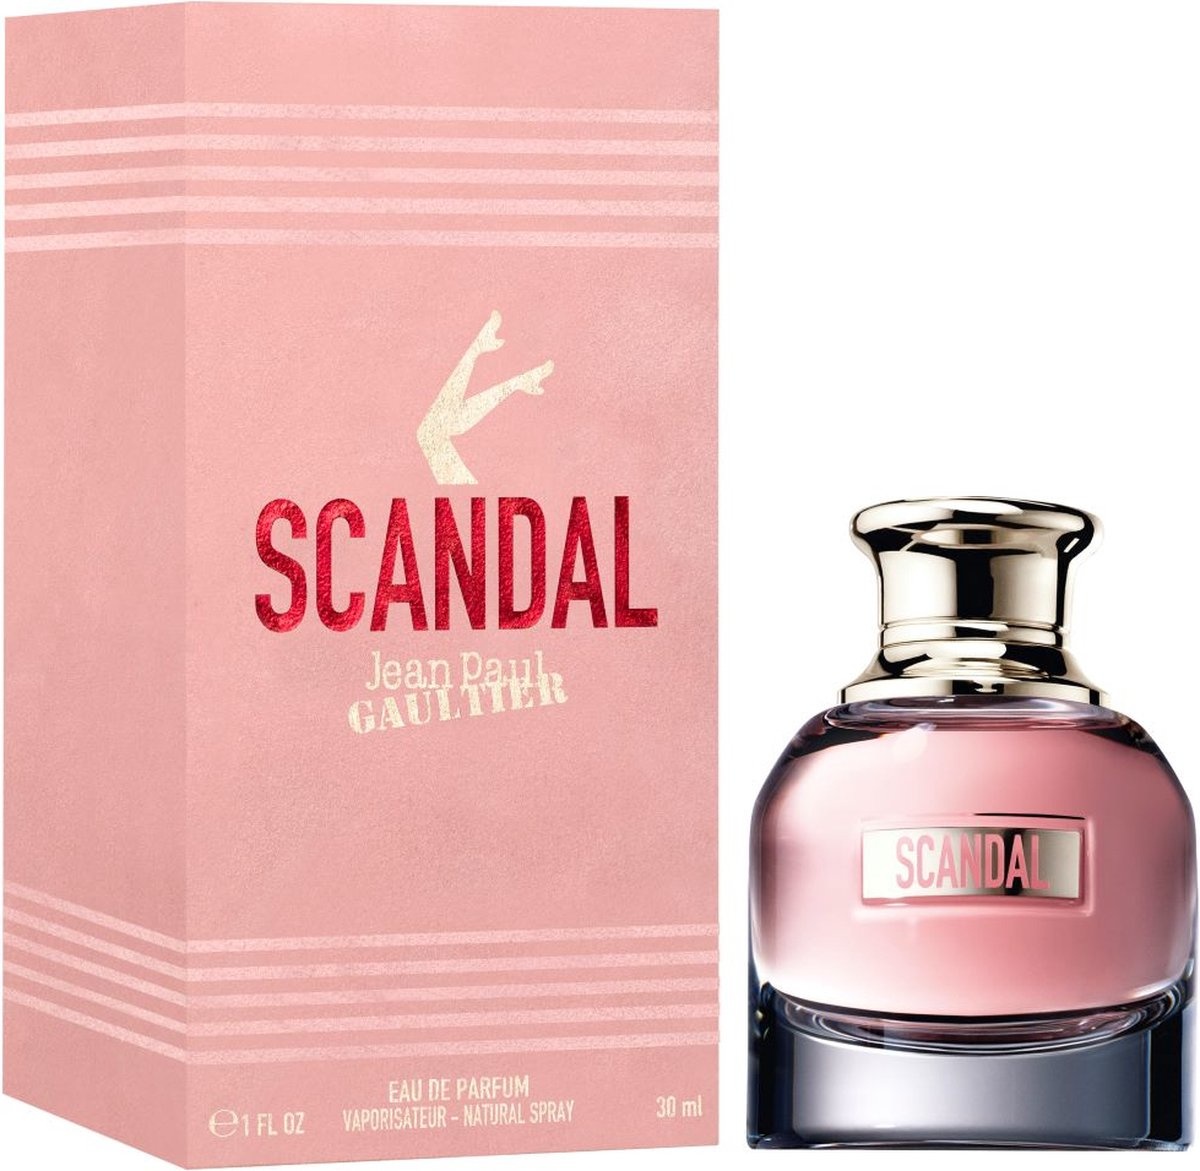 Jean Paul Gaultier Scandal 30 ml - Eau de Parfum - Women's Perfume